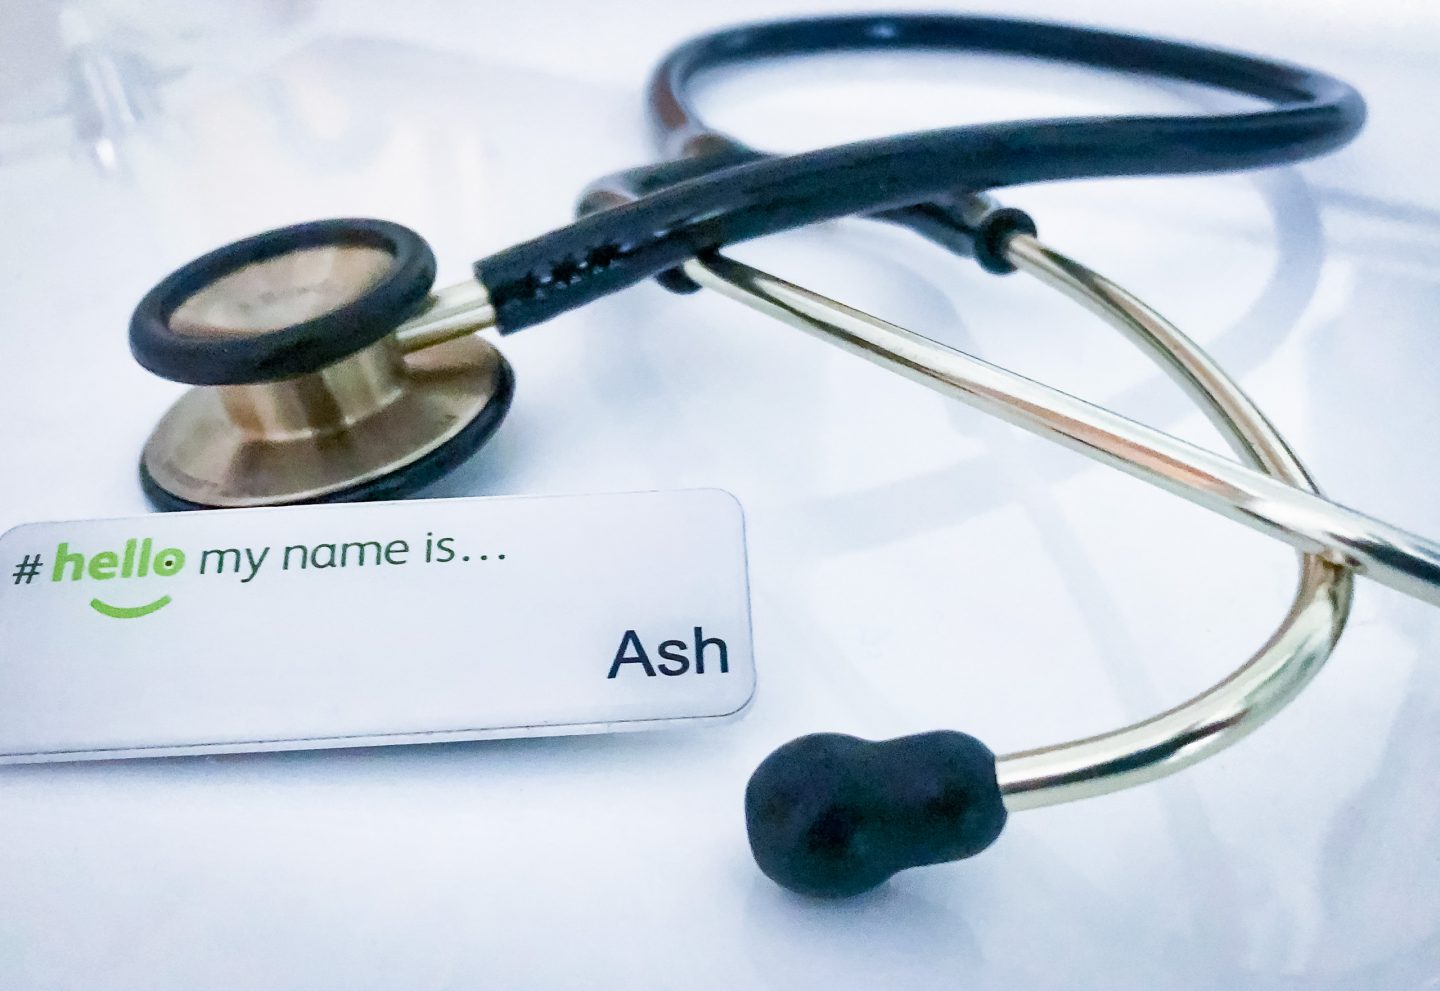 Hello my name is Ash badge